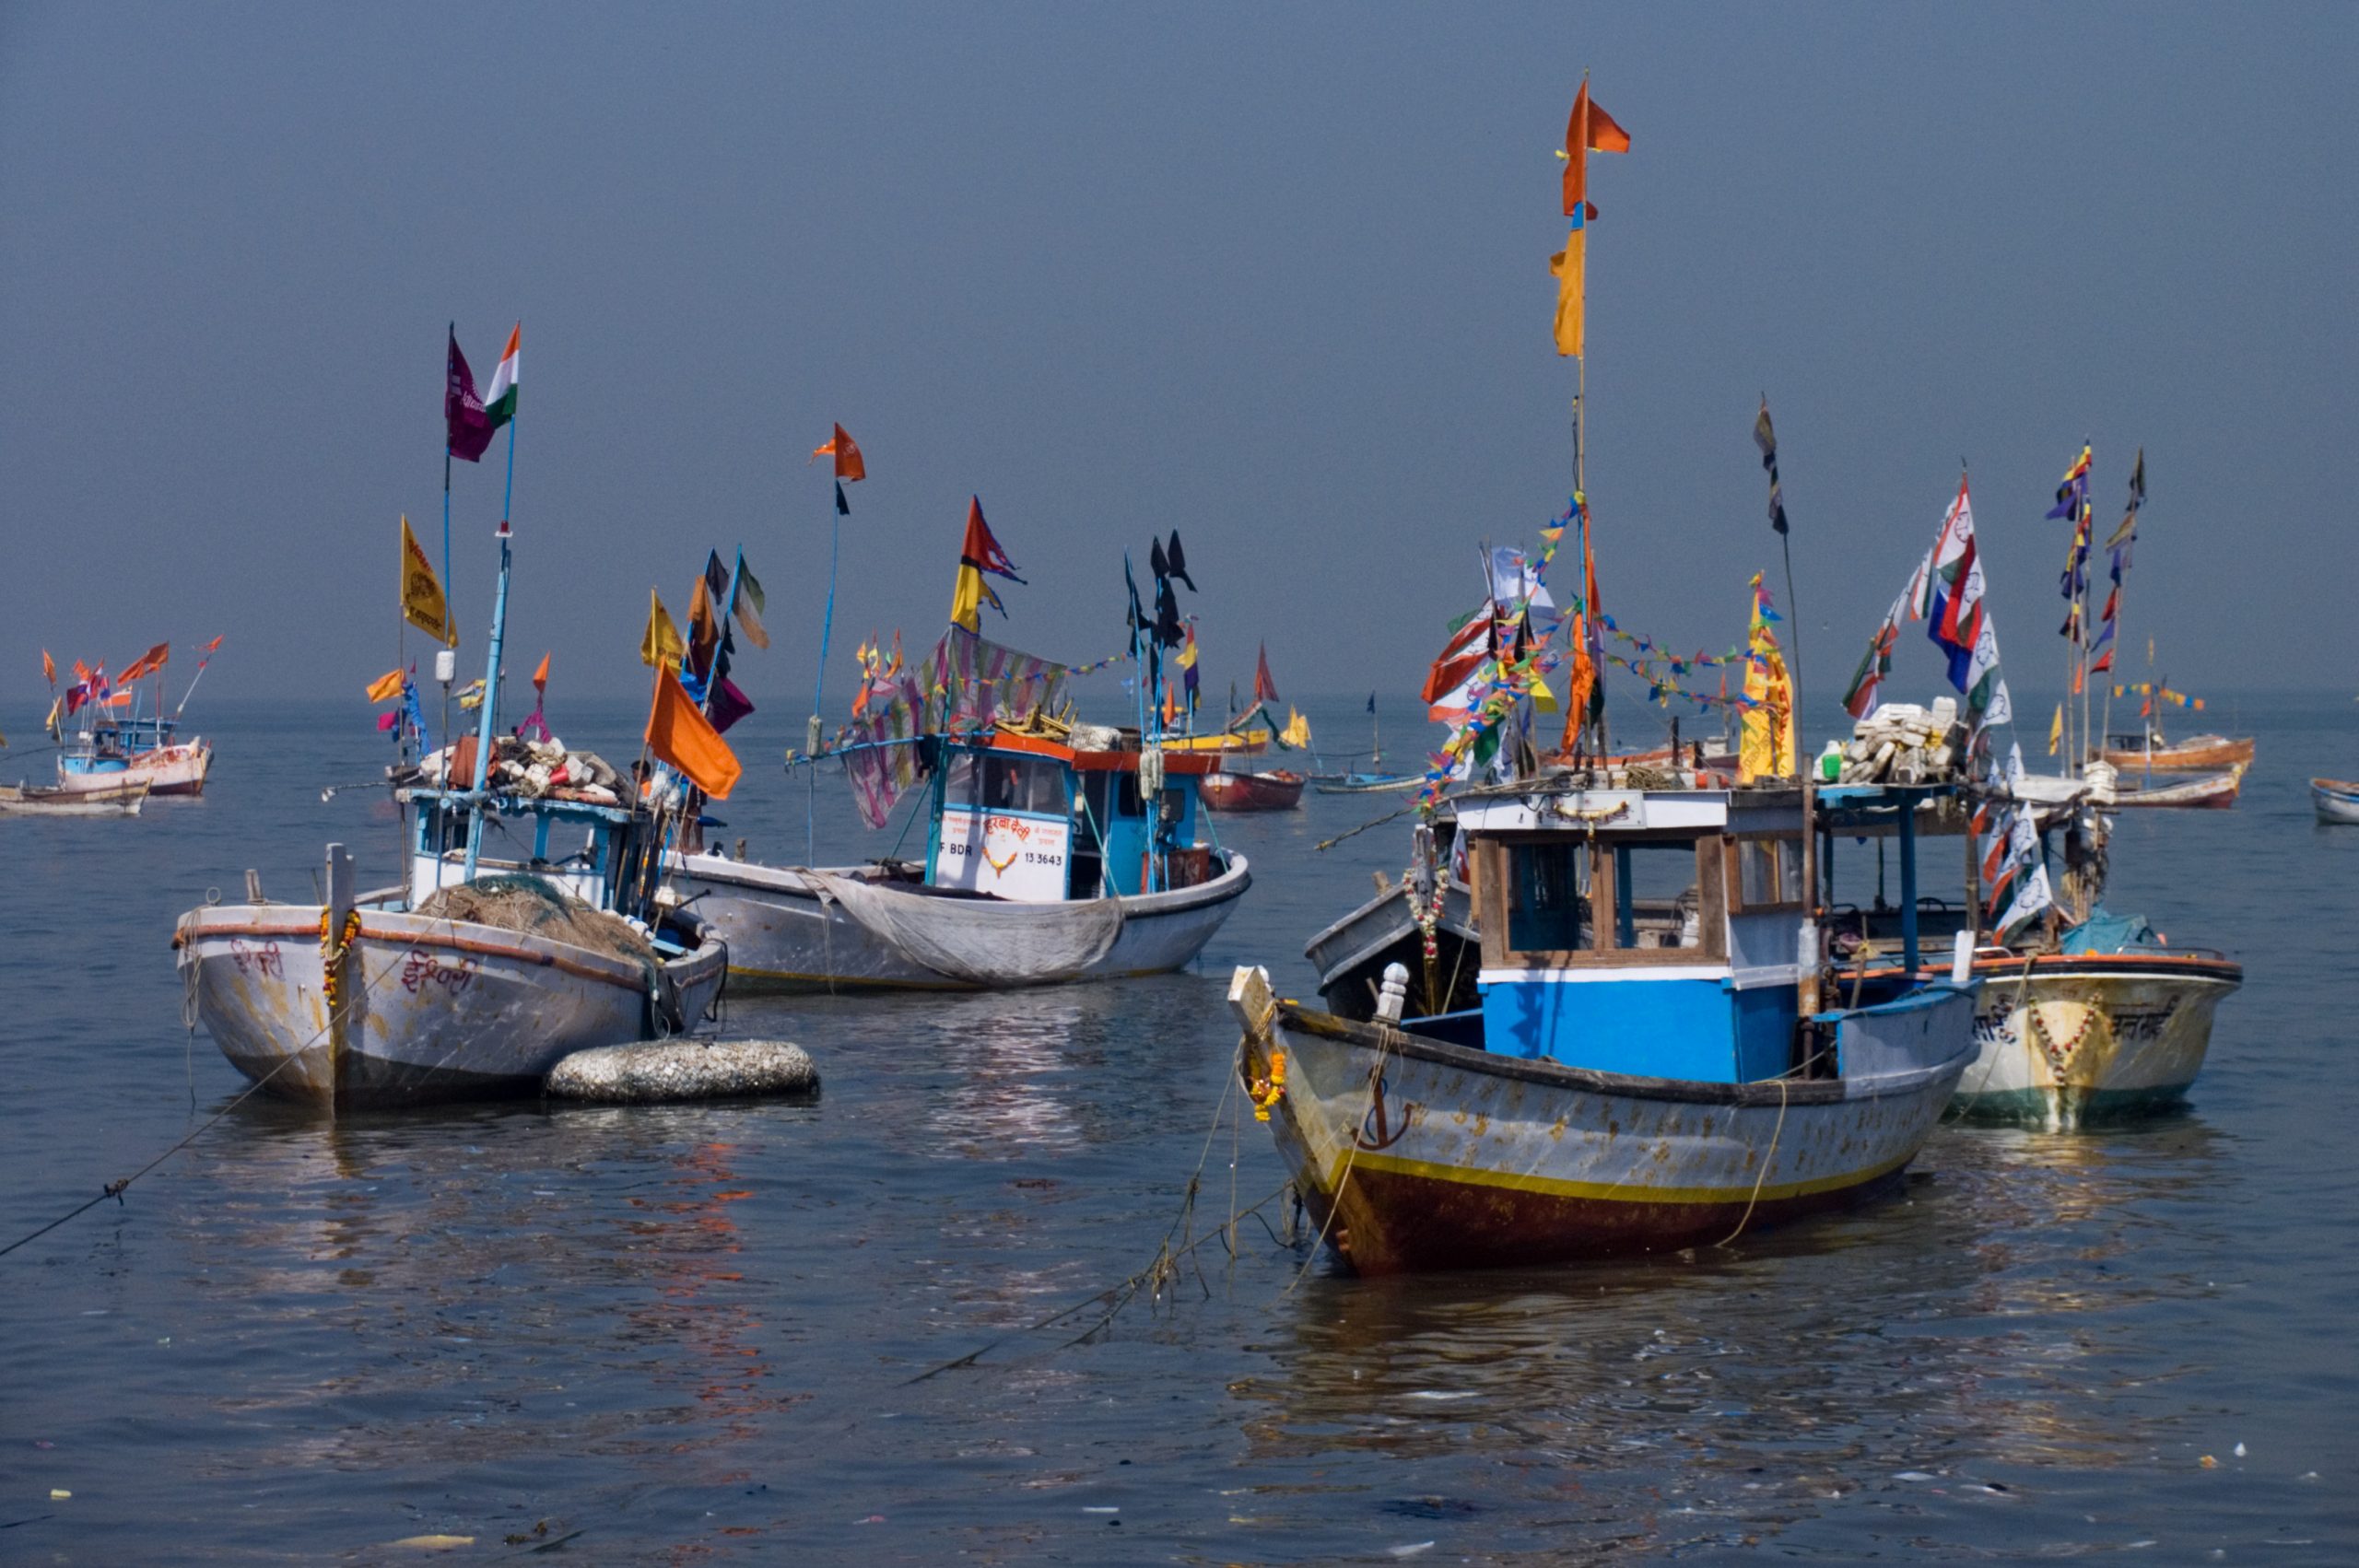 Shocking! 3 fishermen killed in boat accident near Mangalore